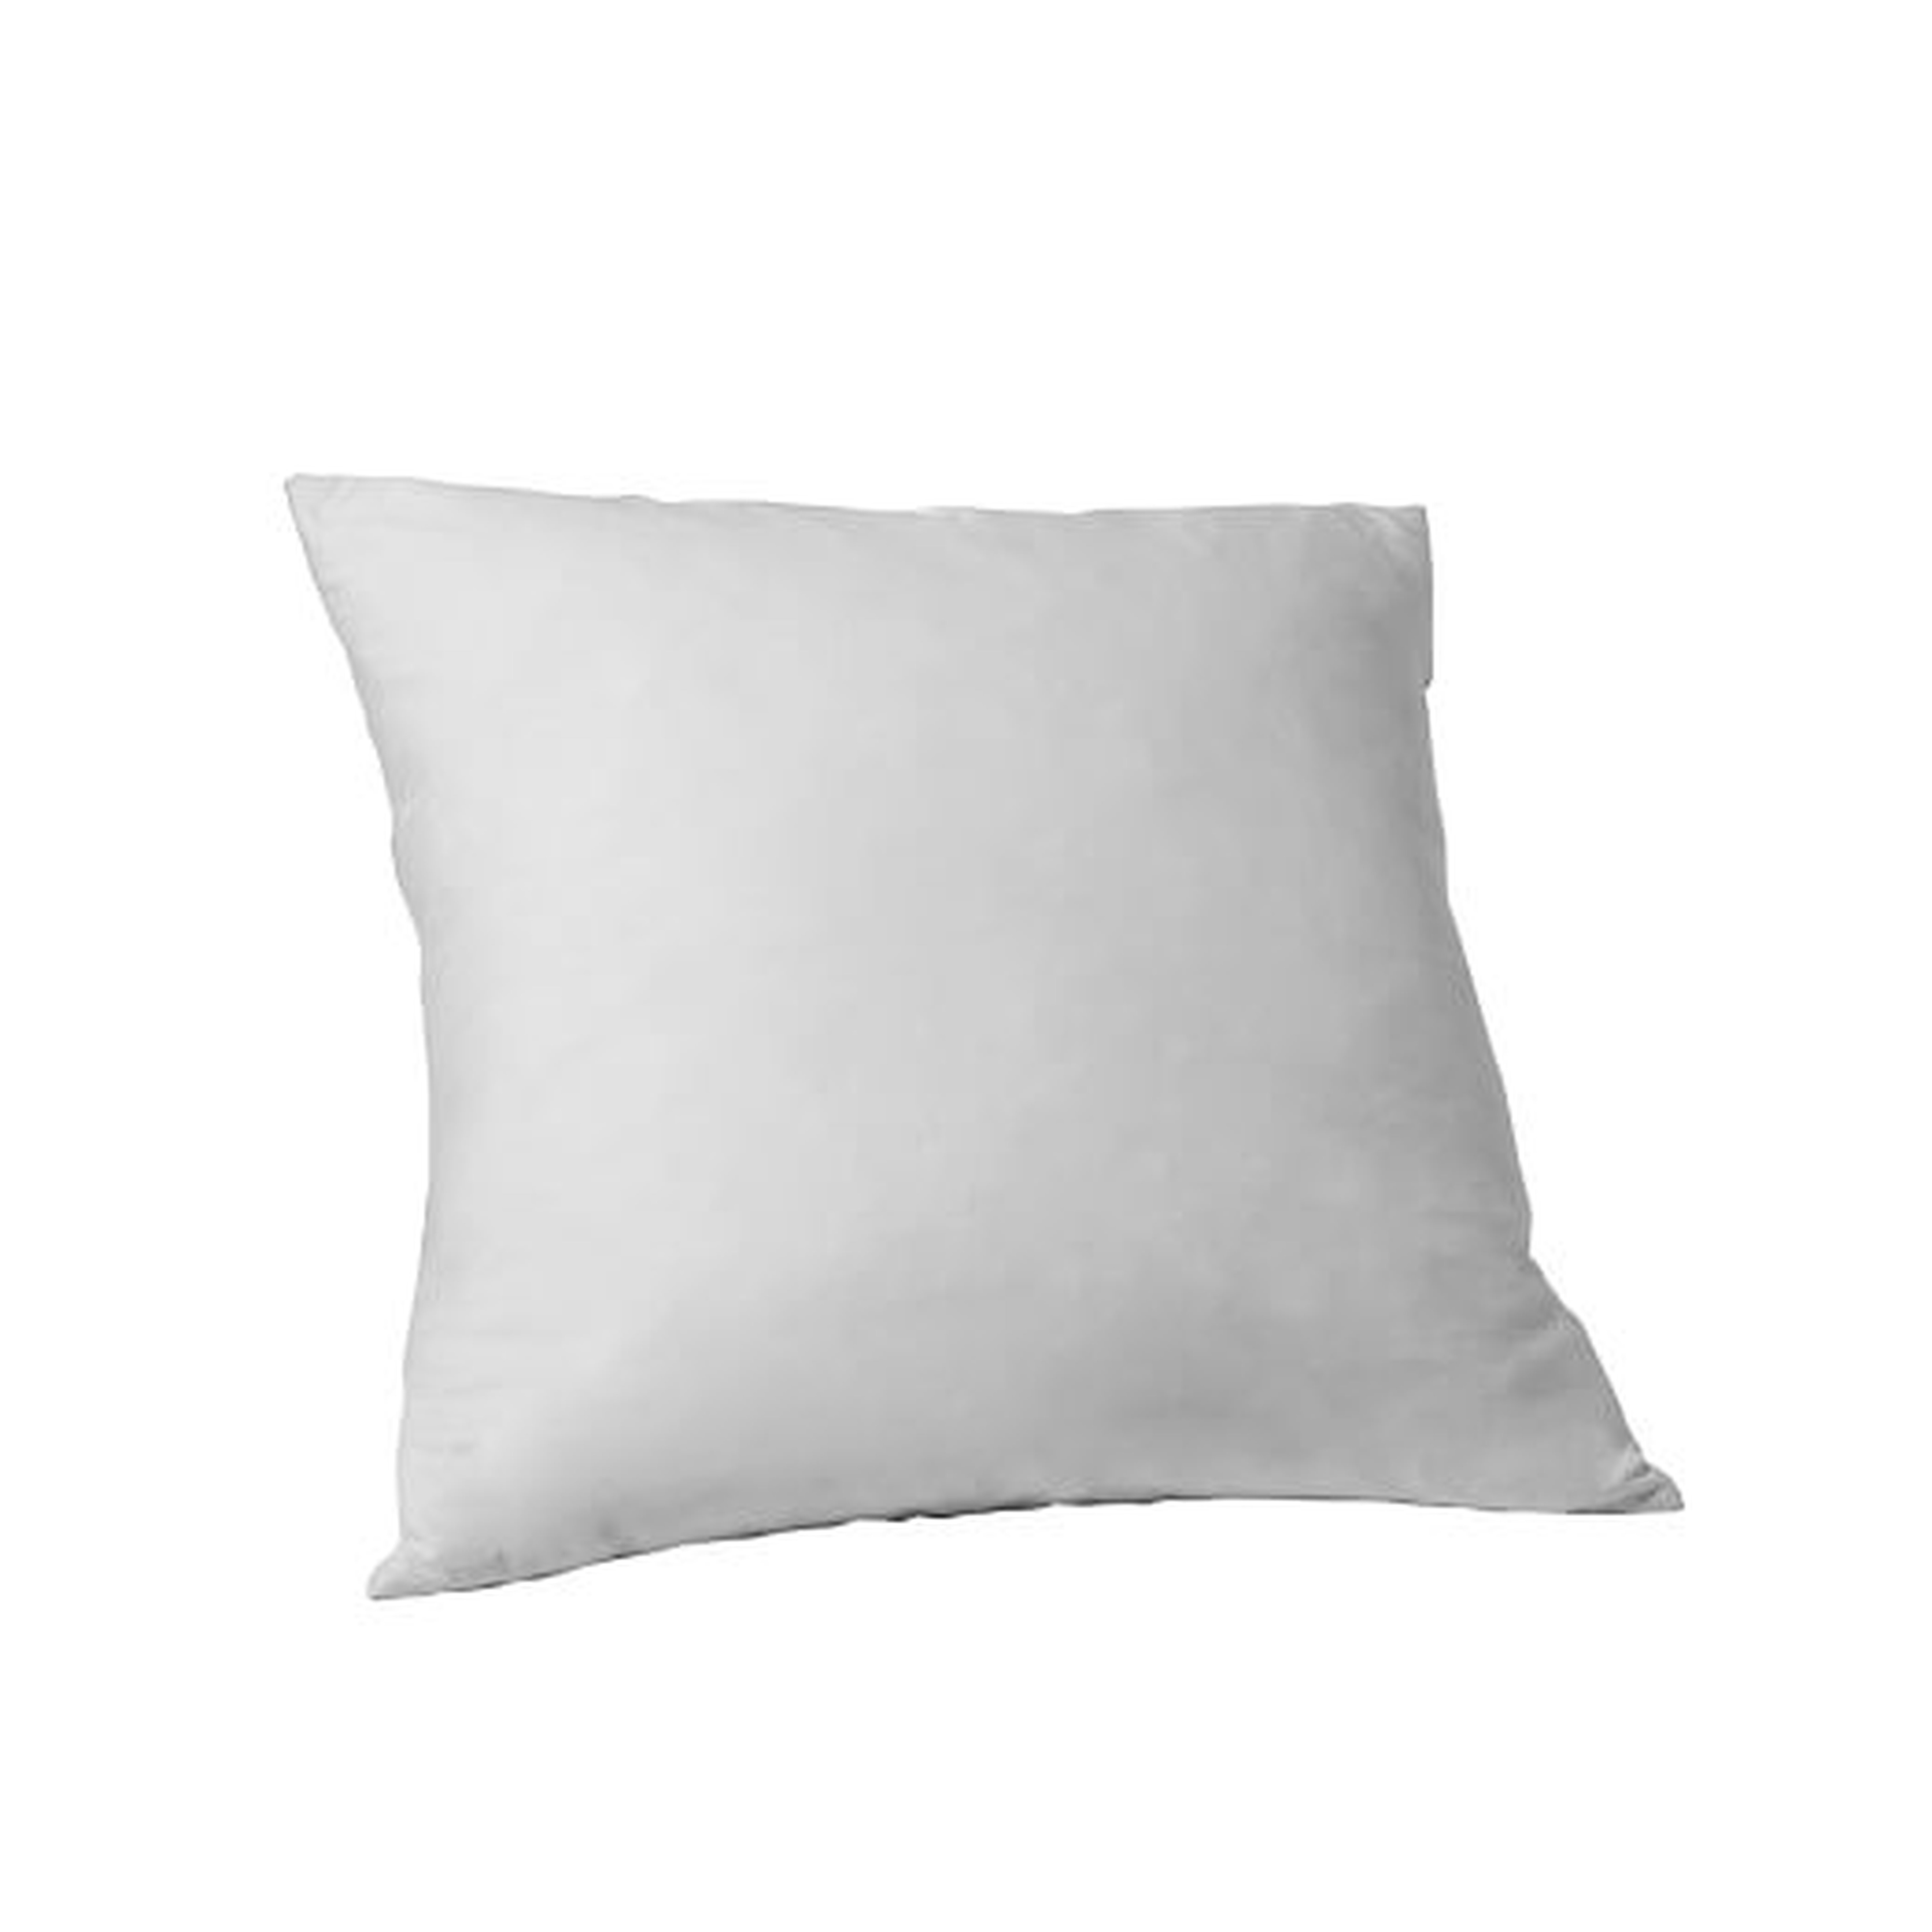 Decorative Pillow Insert – 20"sq. - Feather - West Elm